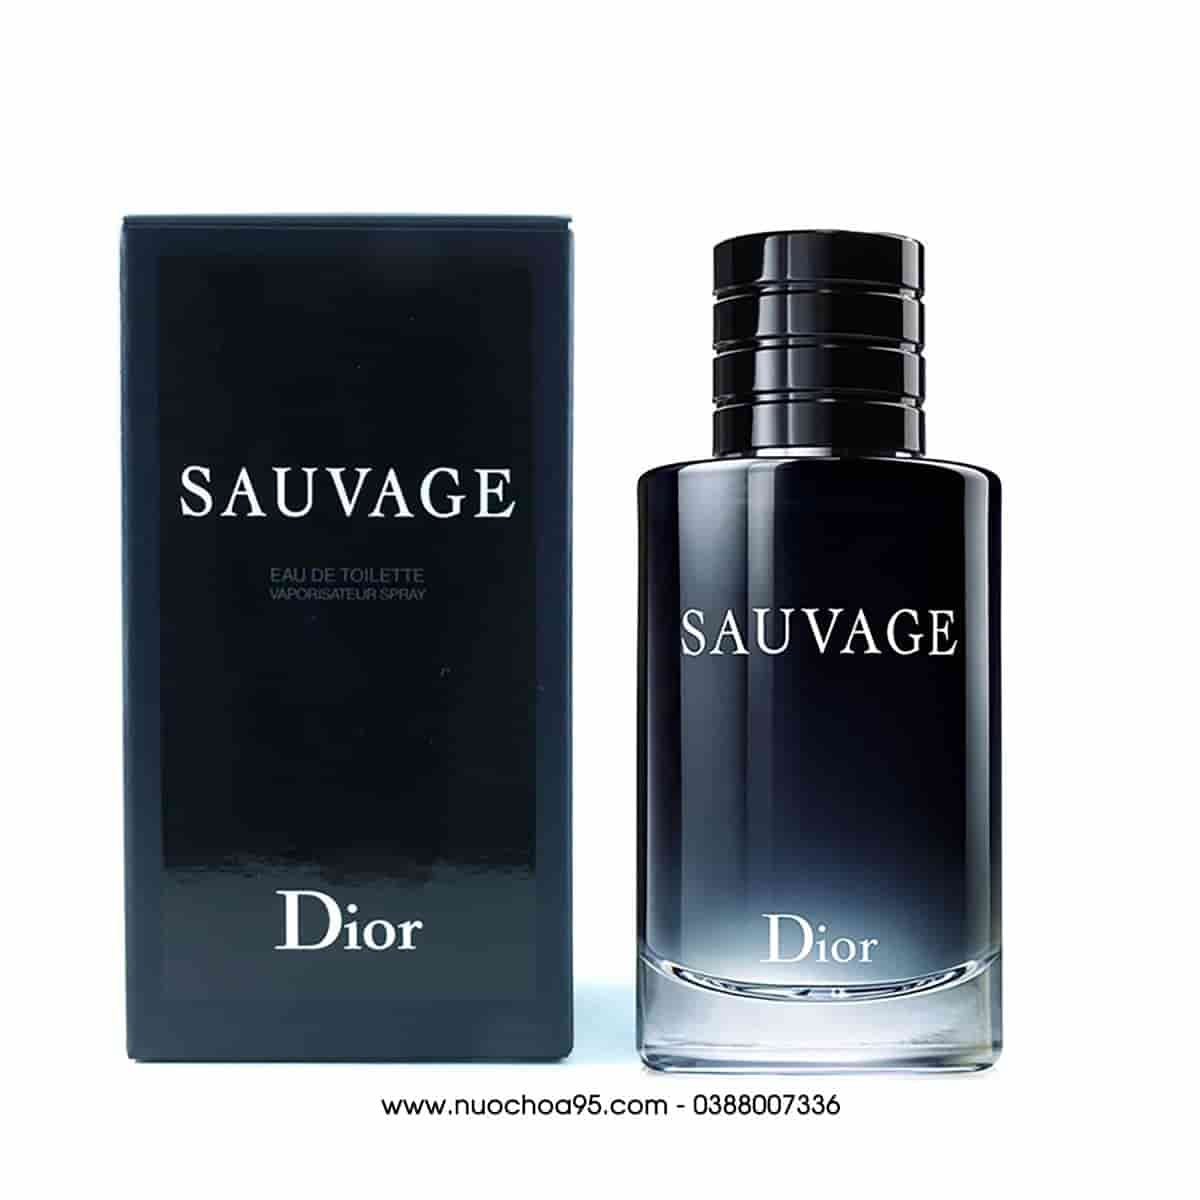 Nước hoa Dior Sauvage Very Cool Spray 100ml  Theperfumevn